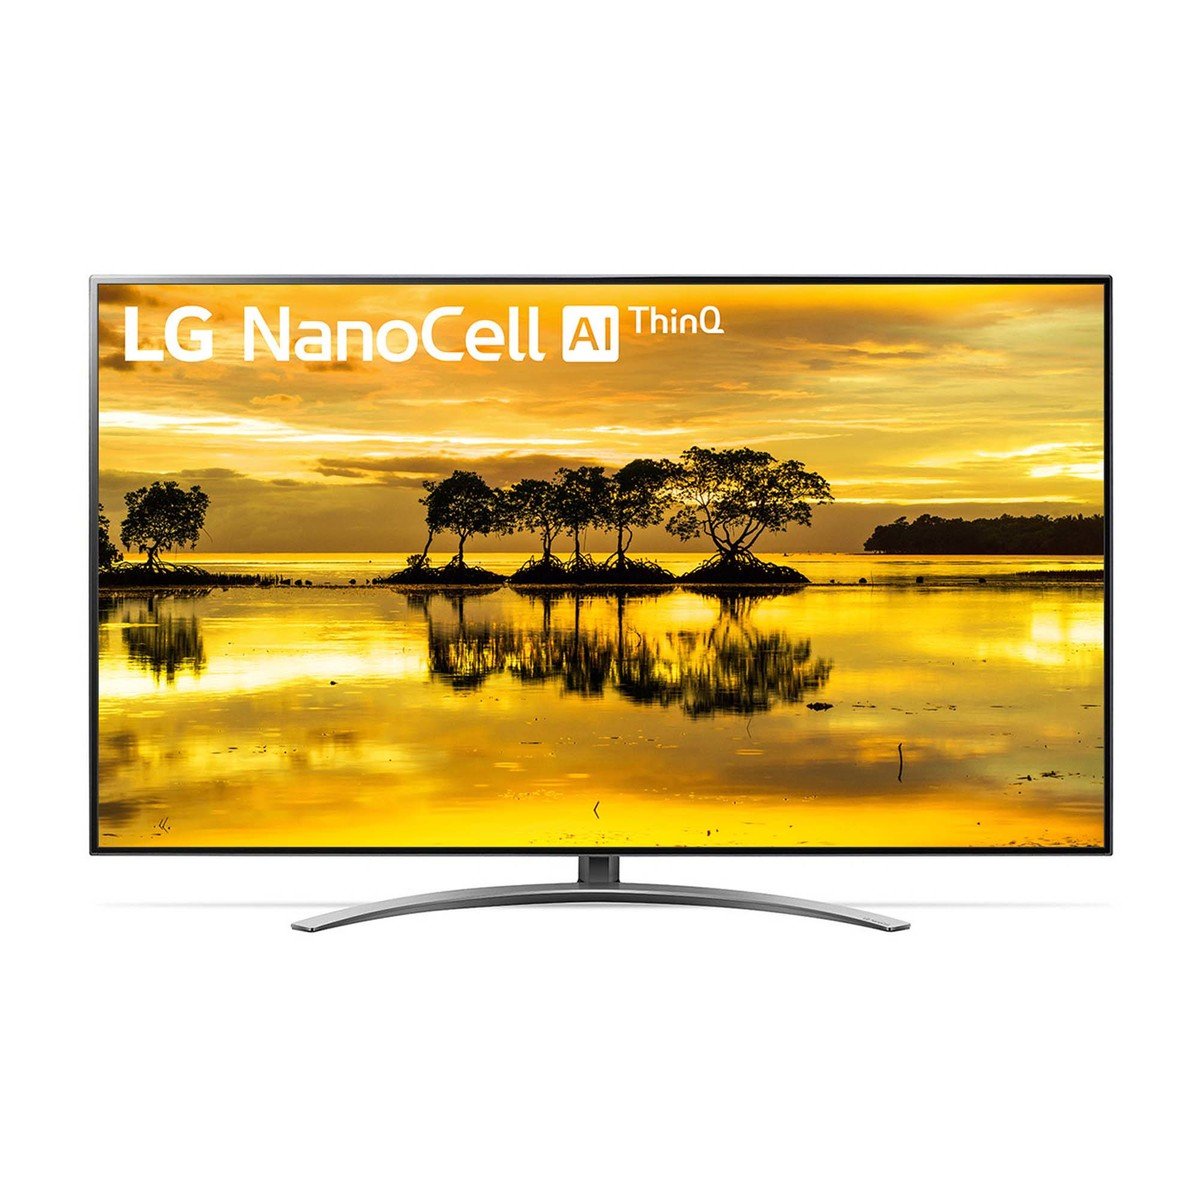 LG NanoCell Super Ultra HD TV 65SM9000PVA 65"